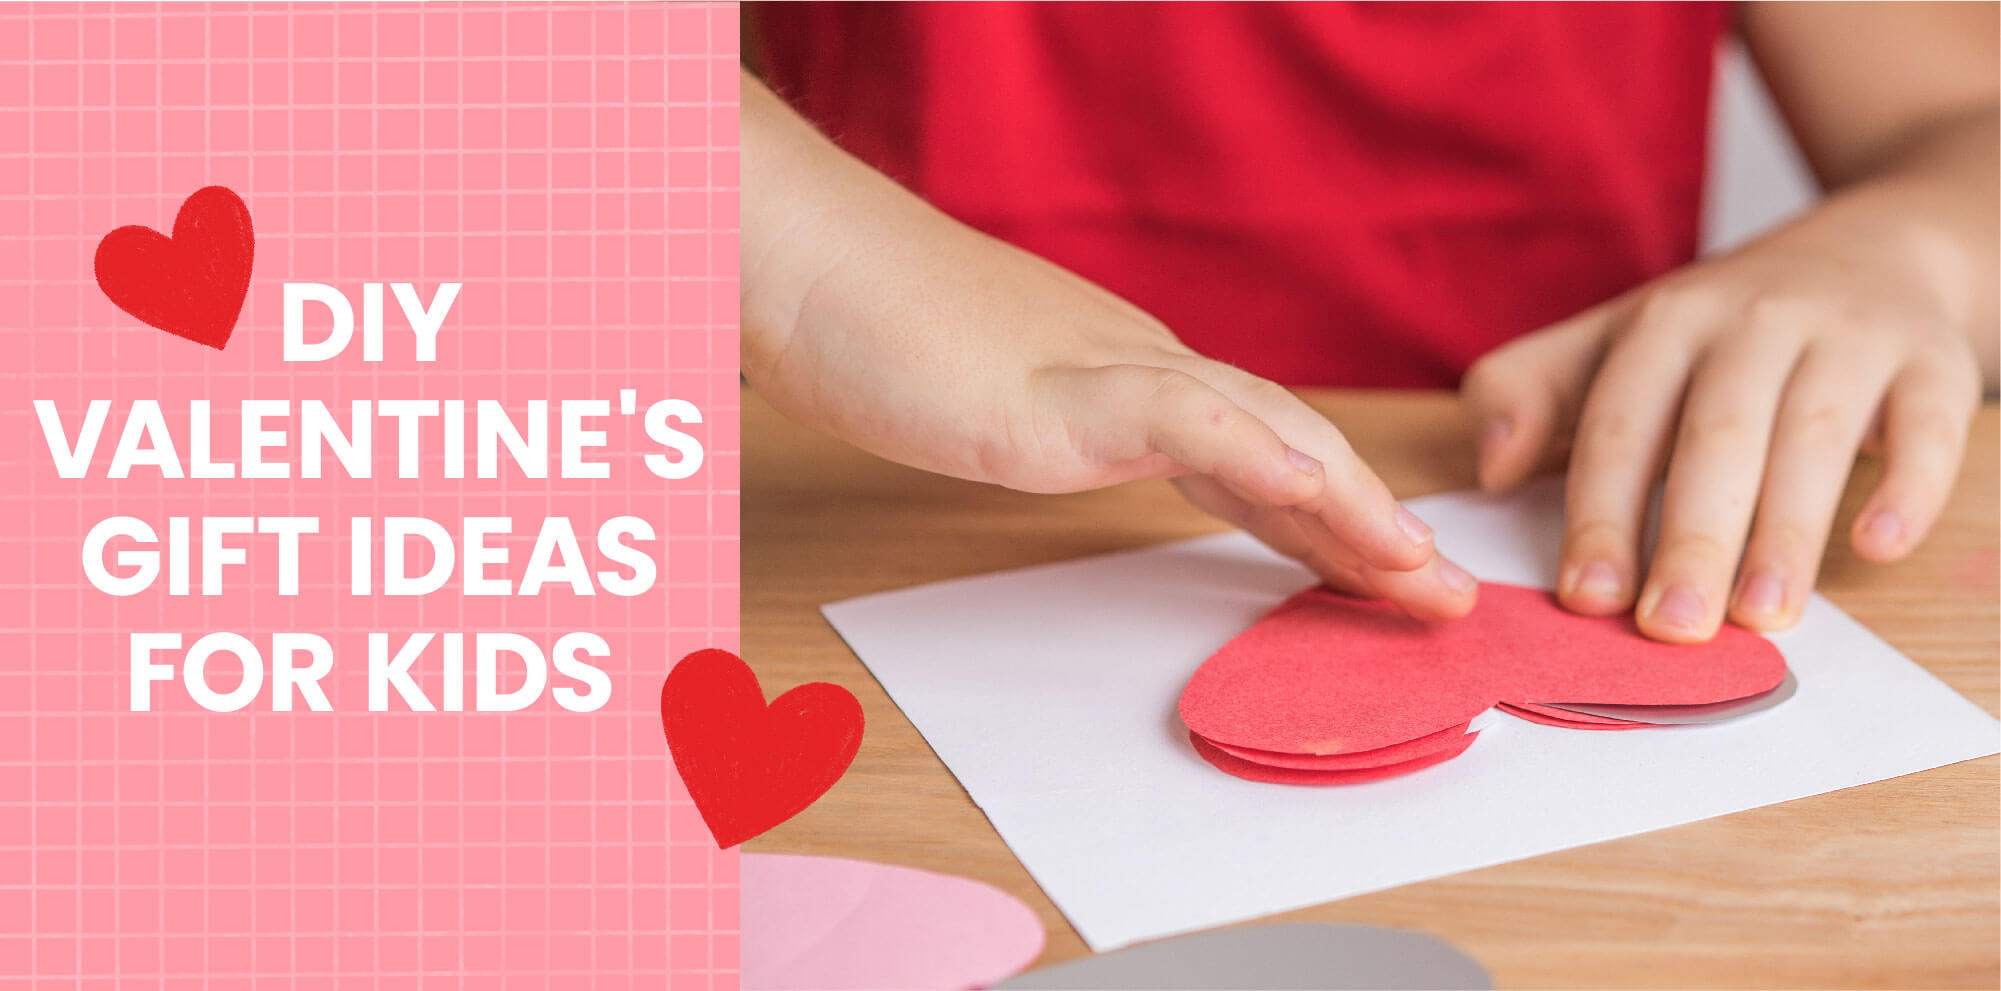 DIY Valentine's Day Gift Ideas for 2020 - Fresh & Unique